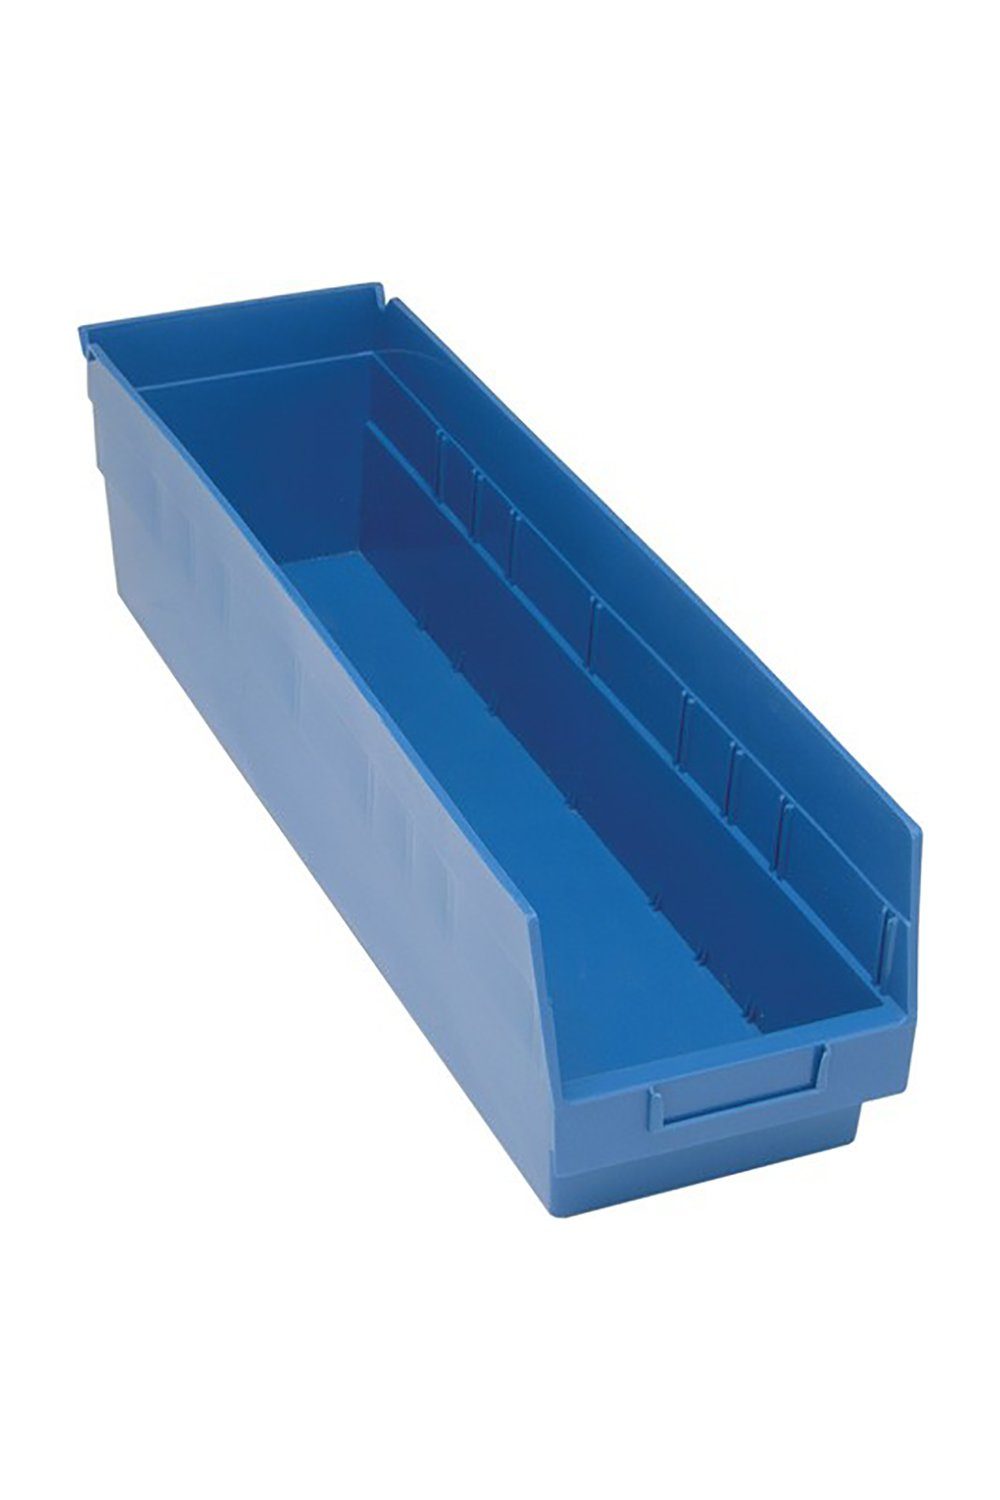 Shelf Bin for 24"D Shelves Bins & Containers Acart 23-5/8'' x 6-5/8'' x 6'' Blue 